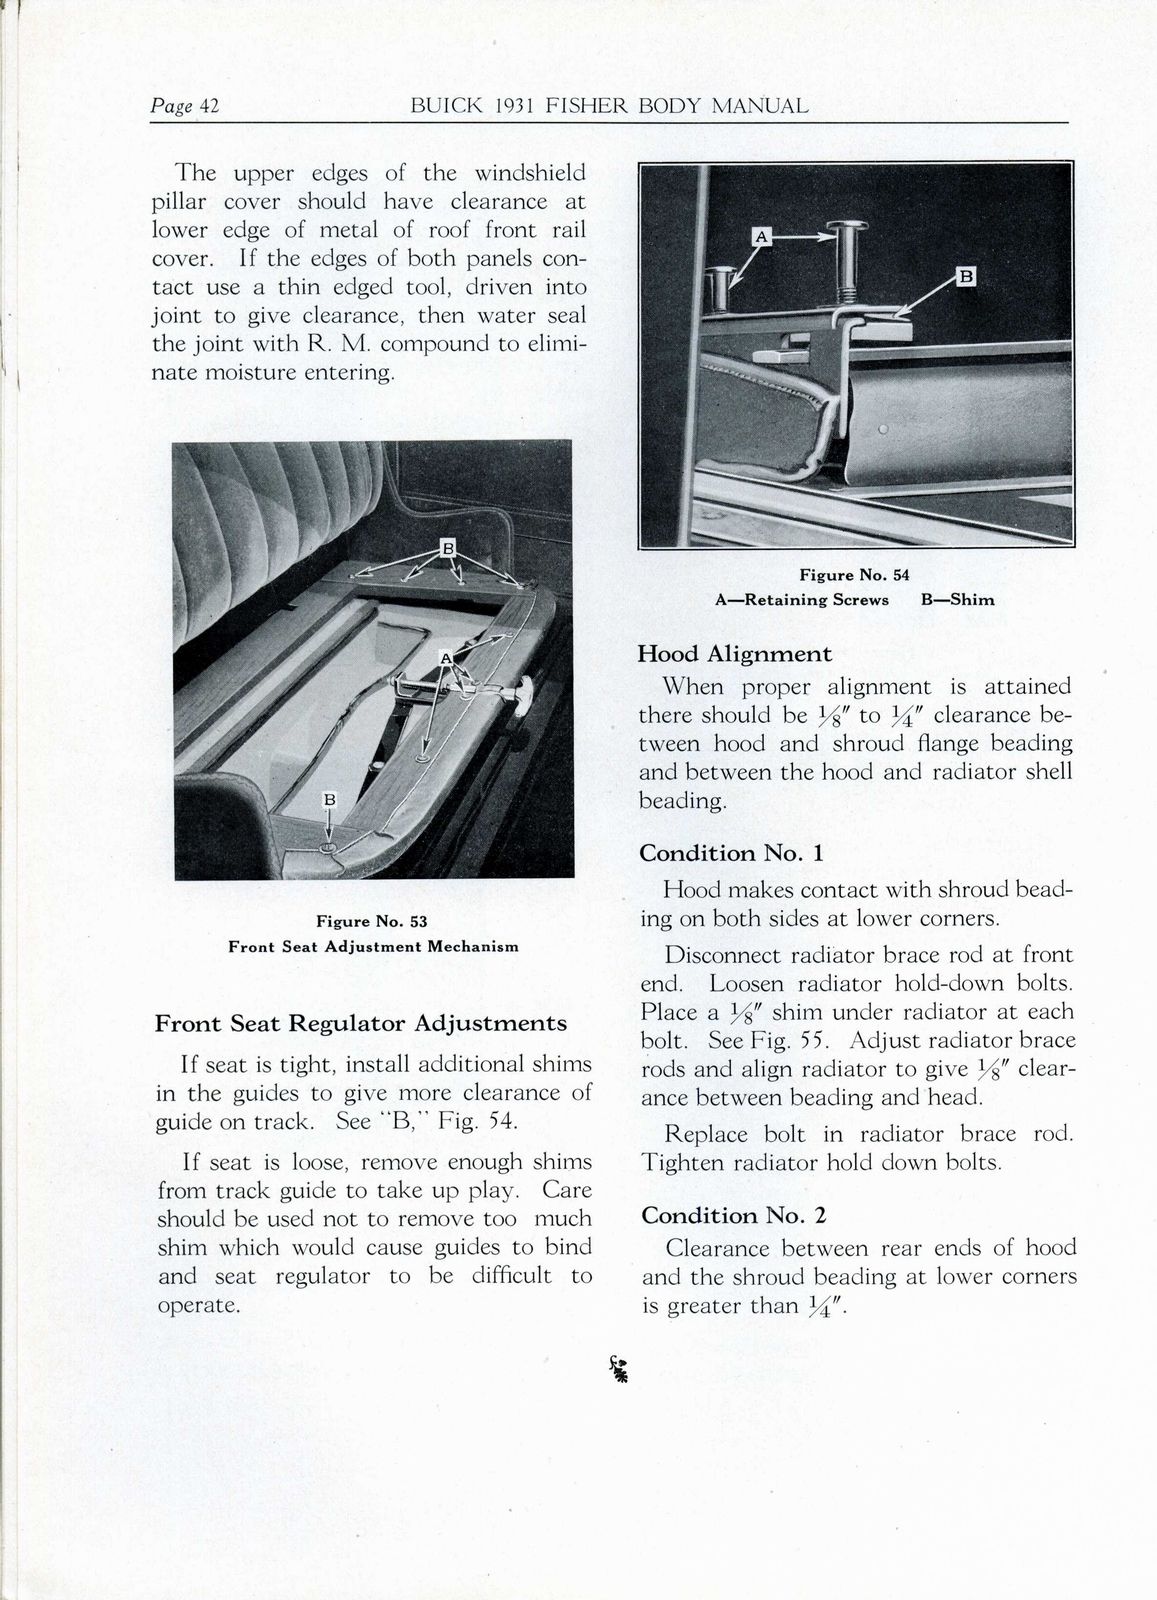 n_1931 Buick Fisher Body Manual-42.jpg